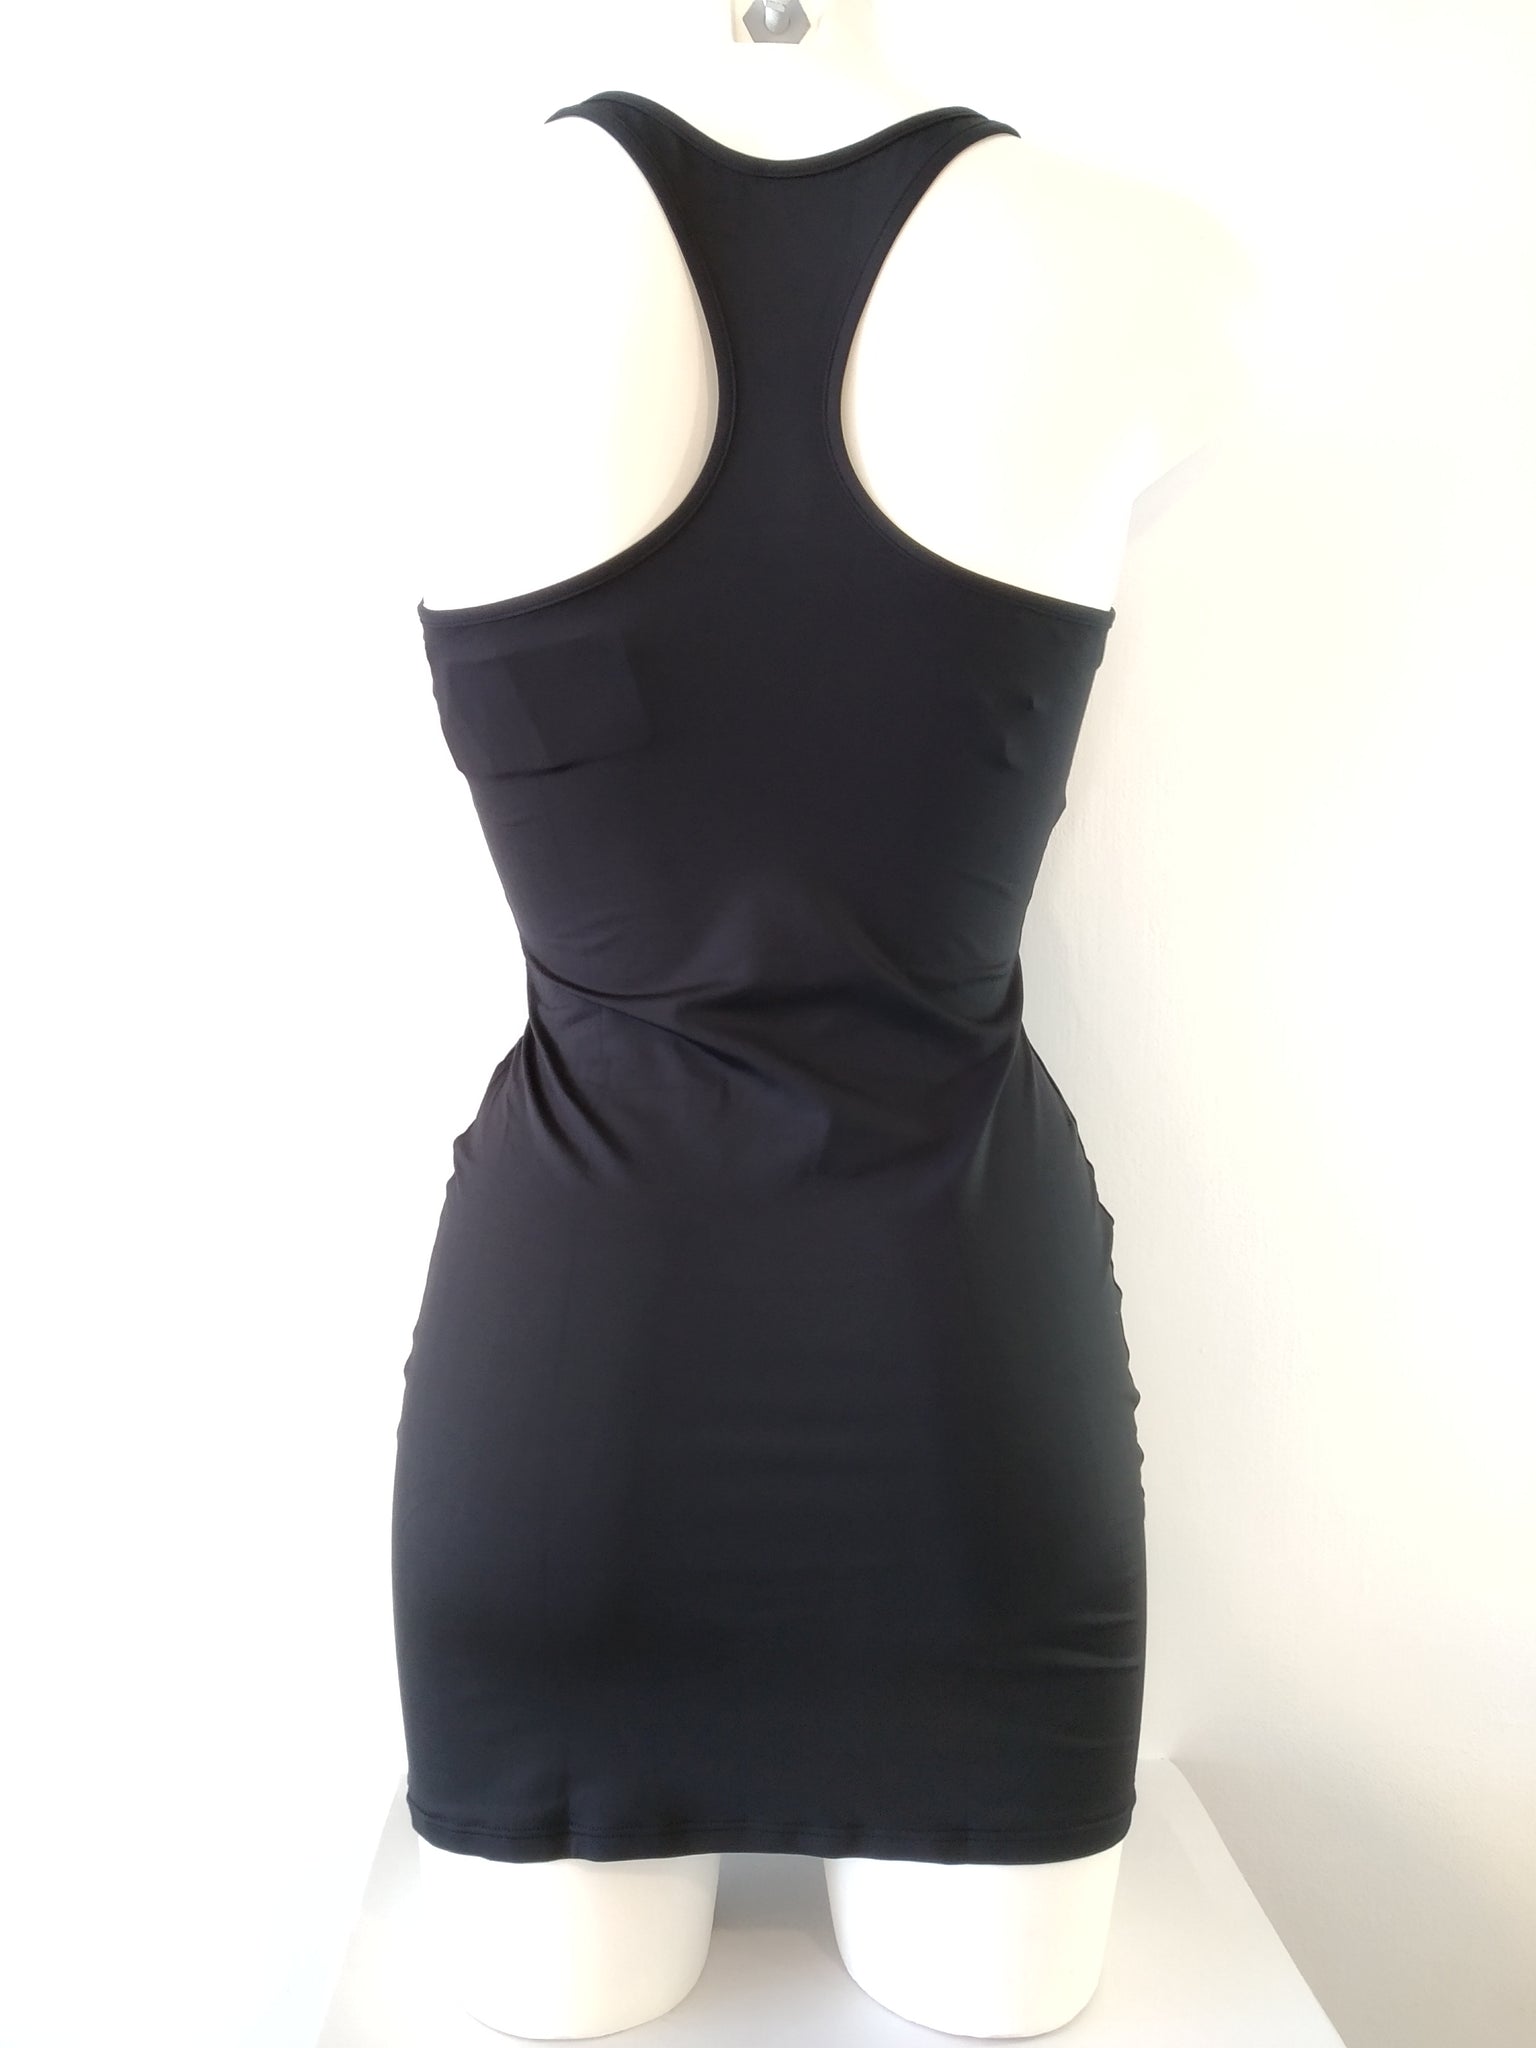 back view of lycra tank dress slim cut, mini,tight on the body, 4 colors: hot pink, black, blue, orange. bikinn.com